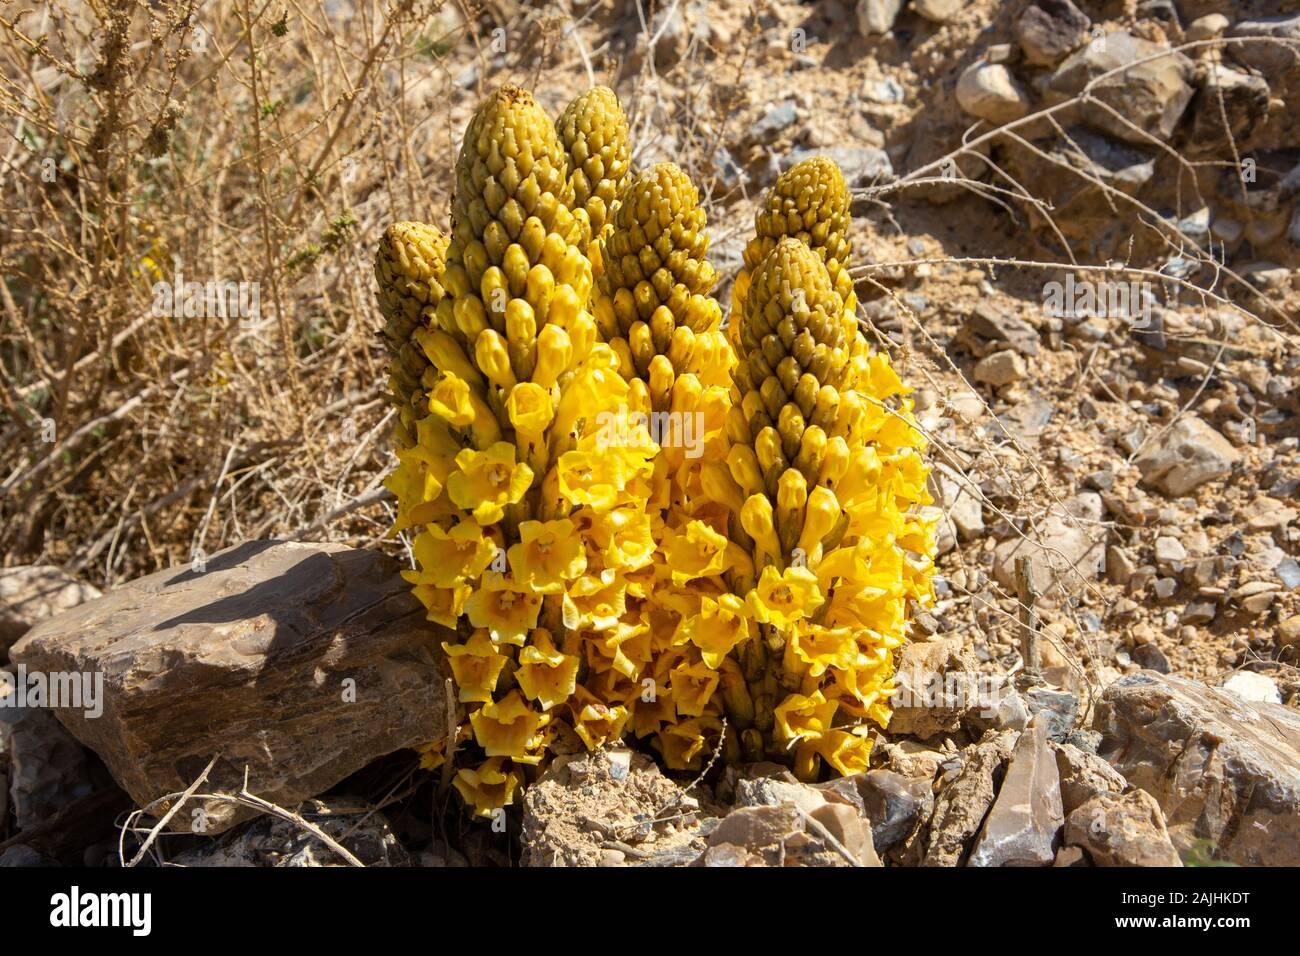 cistanche-cistanche-tubulosa-parasitize-desert-plants-2AJHKDT.jpg